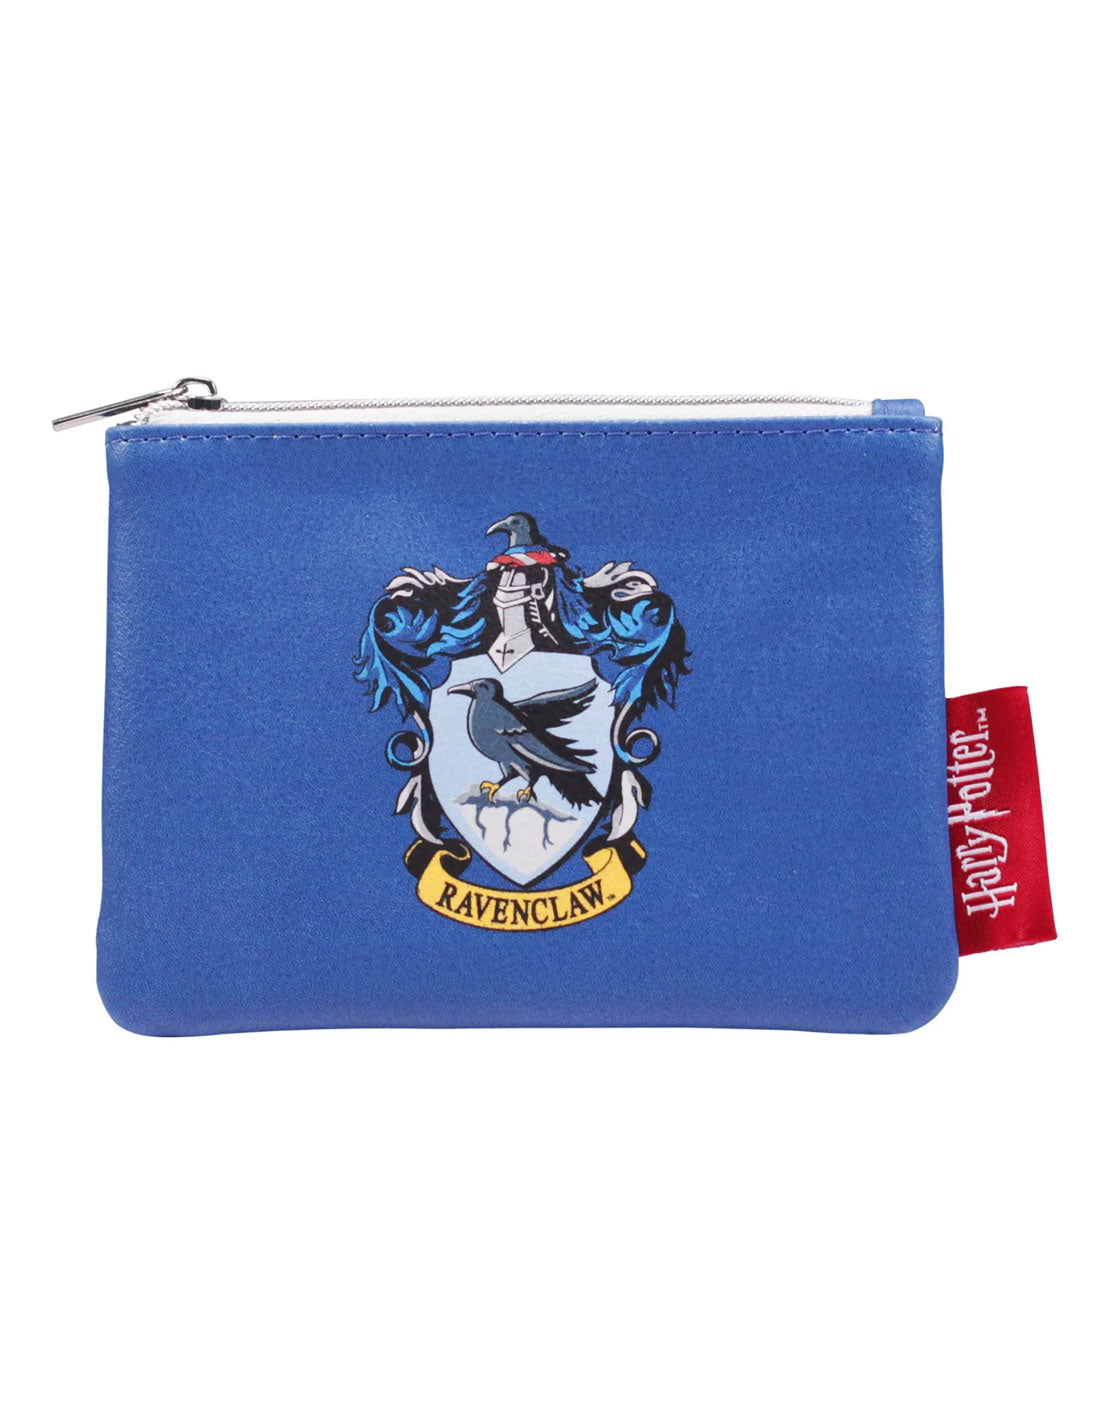 Harry Potter purse - Ravenclaw